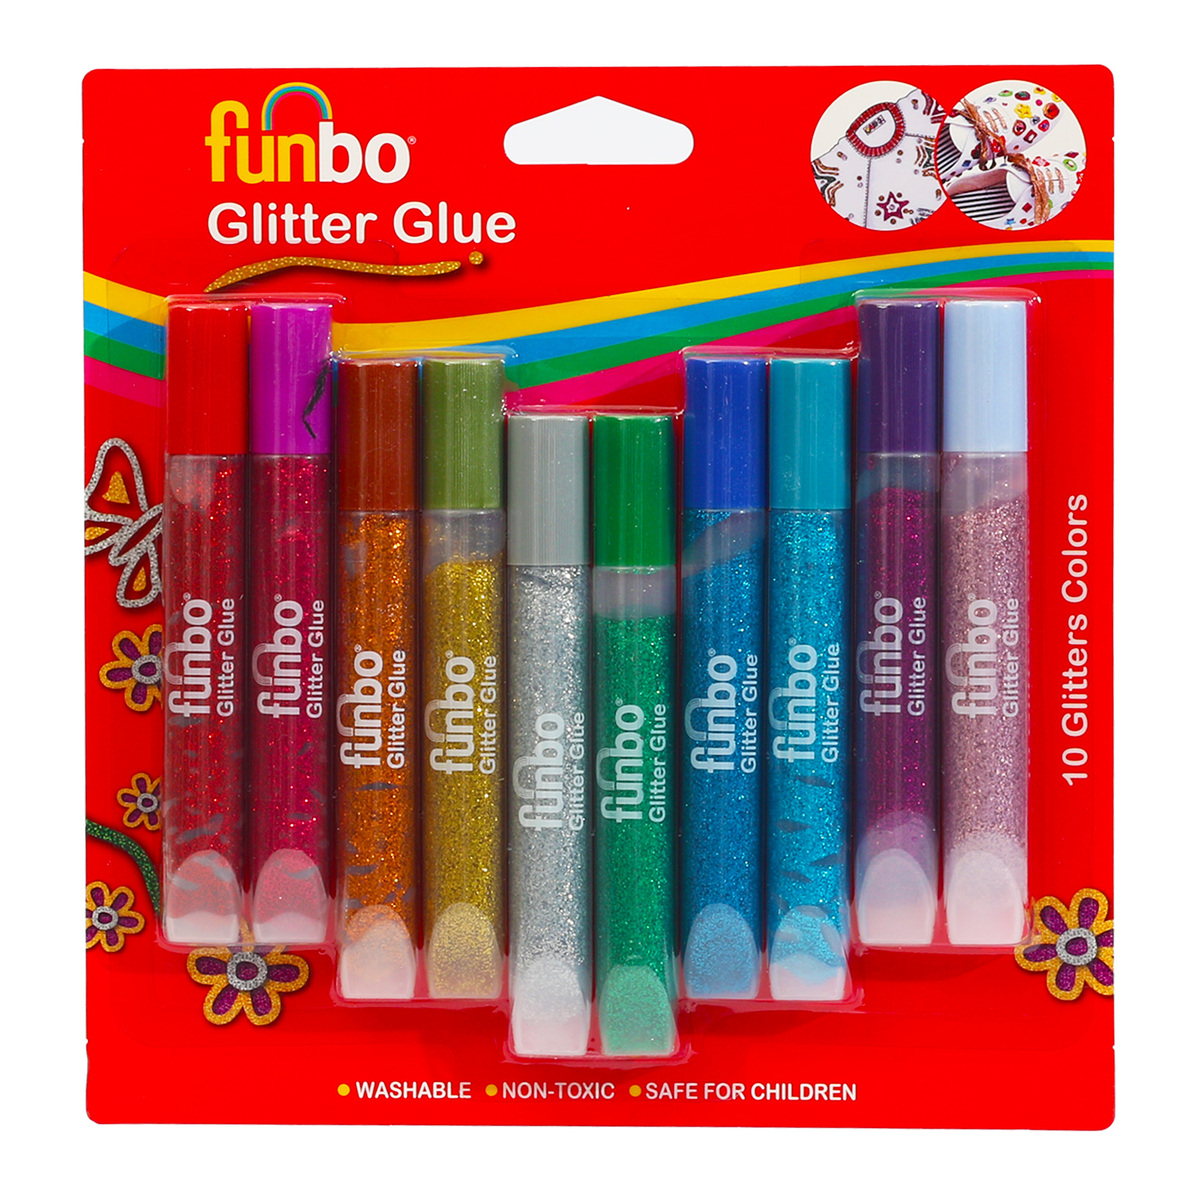 Funbo Glitter Glue FO-GG-10125 10 Colours